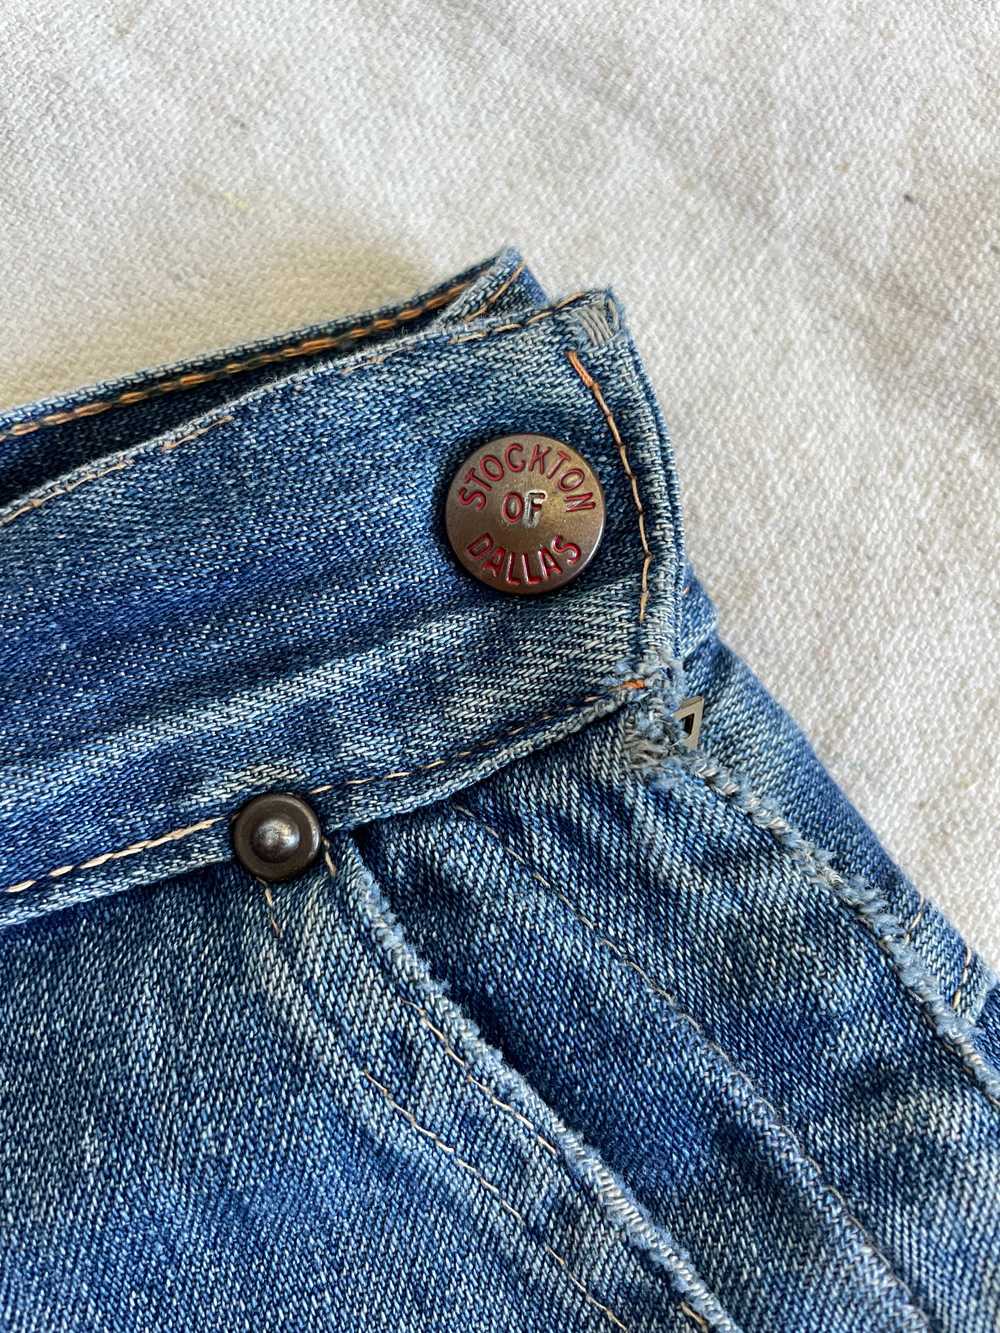 50s Paint Splatter Side Zip Jeans - image 5